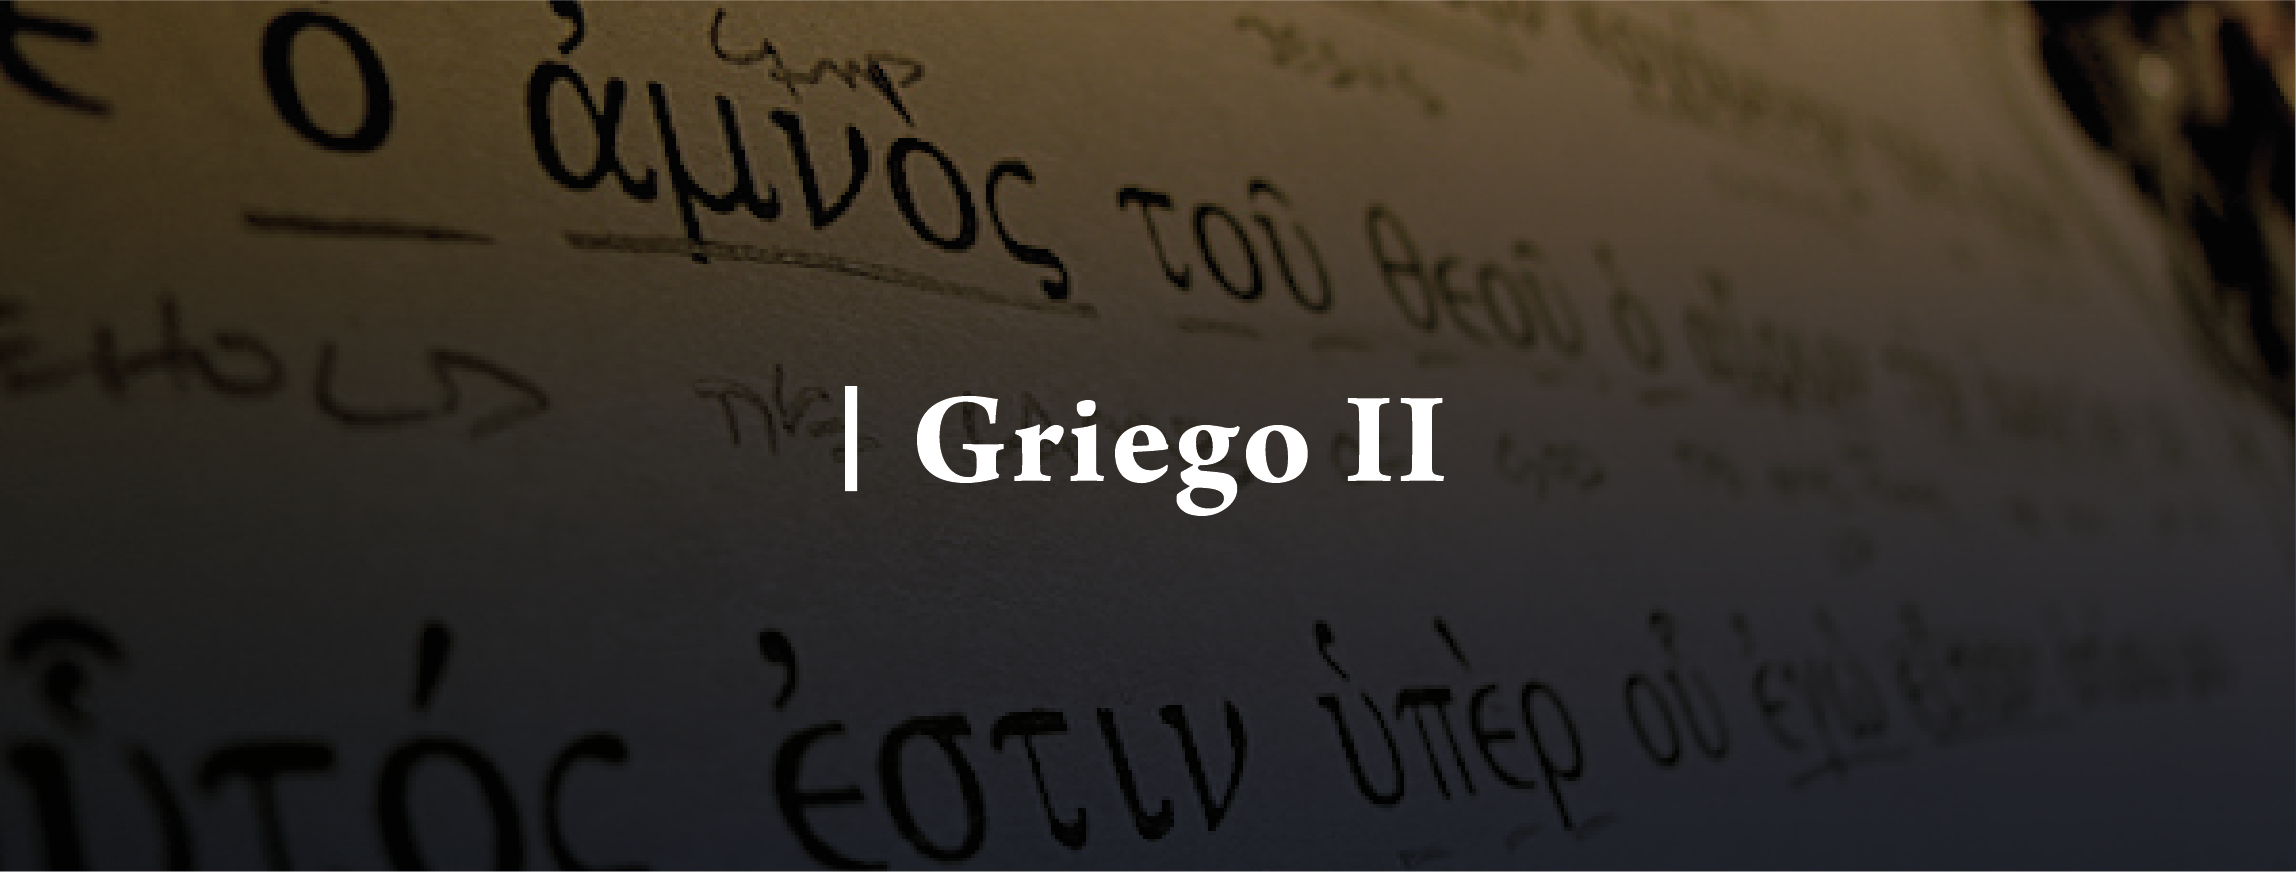 Griego II